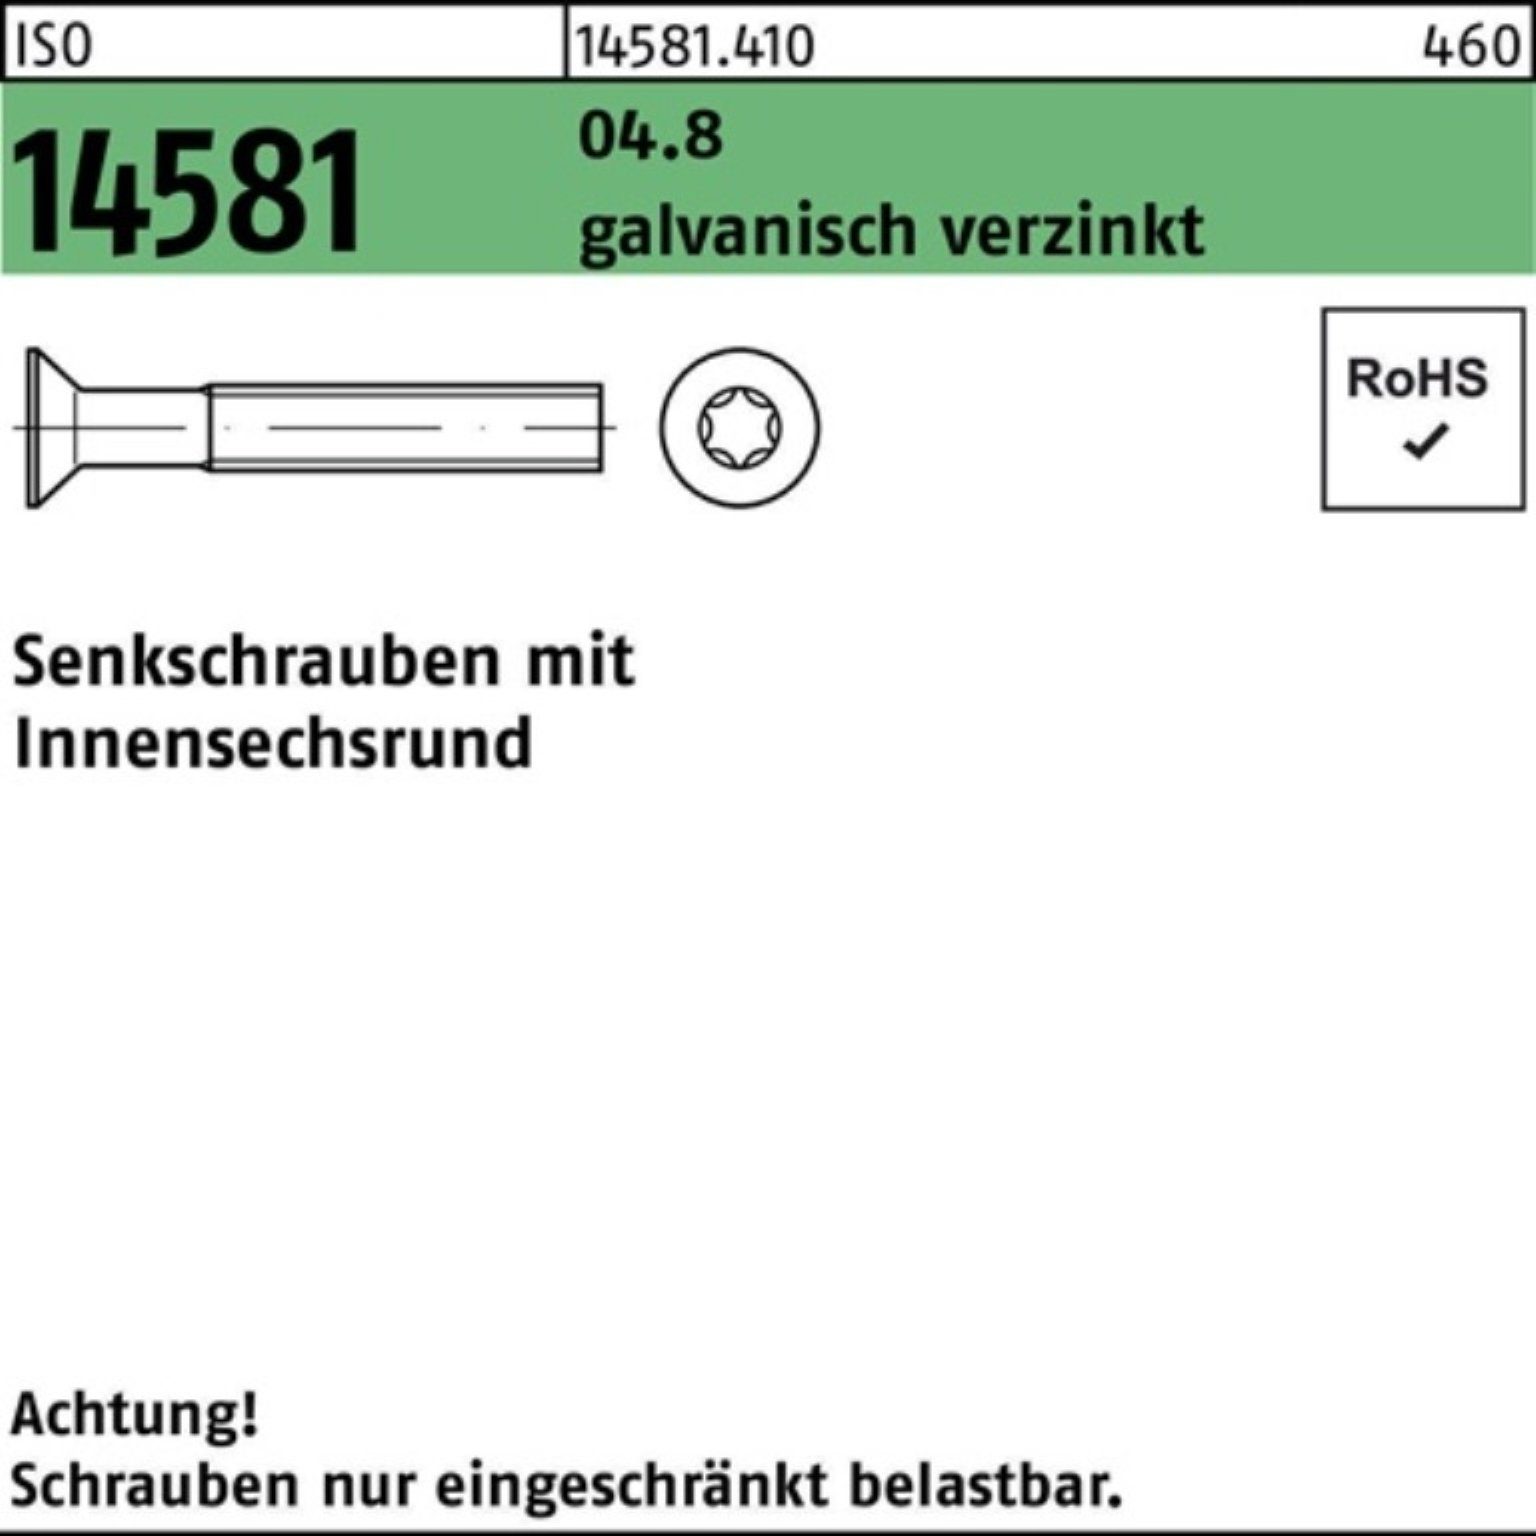 Reyher Senkschraube 500er Pack Senkschraube ISO 14581 ISR M5x35 T25 04.8 galv.verz. 500St.